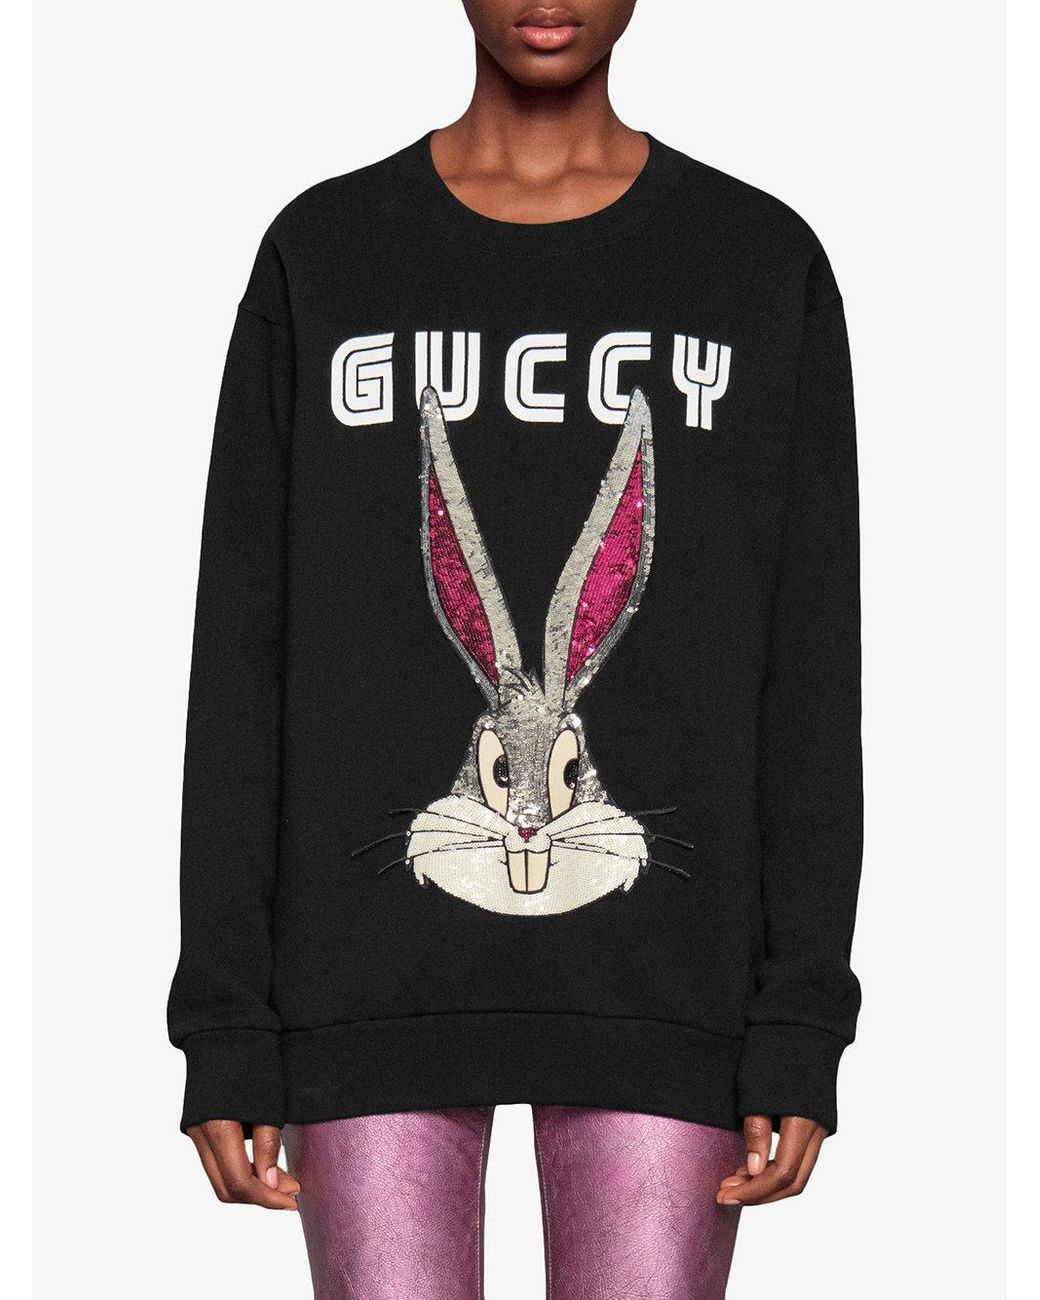 Gucci Bugs Bunny Cotton Sweatshirt in Black | Lyst